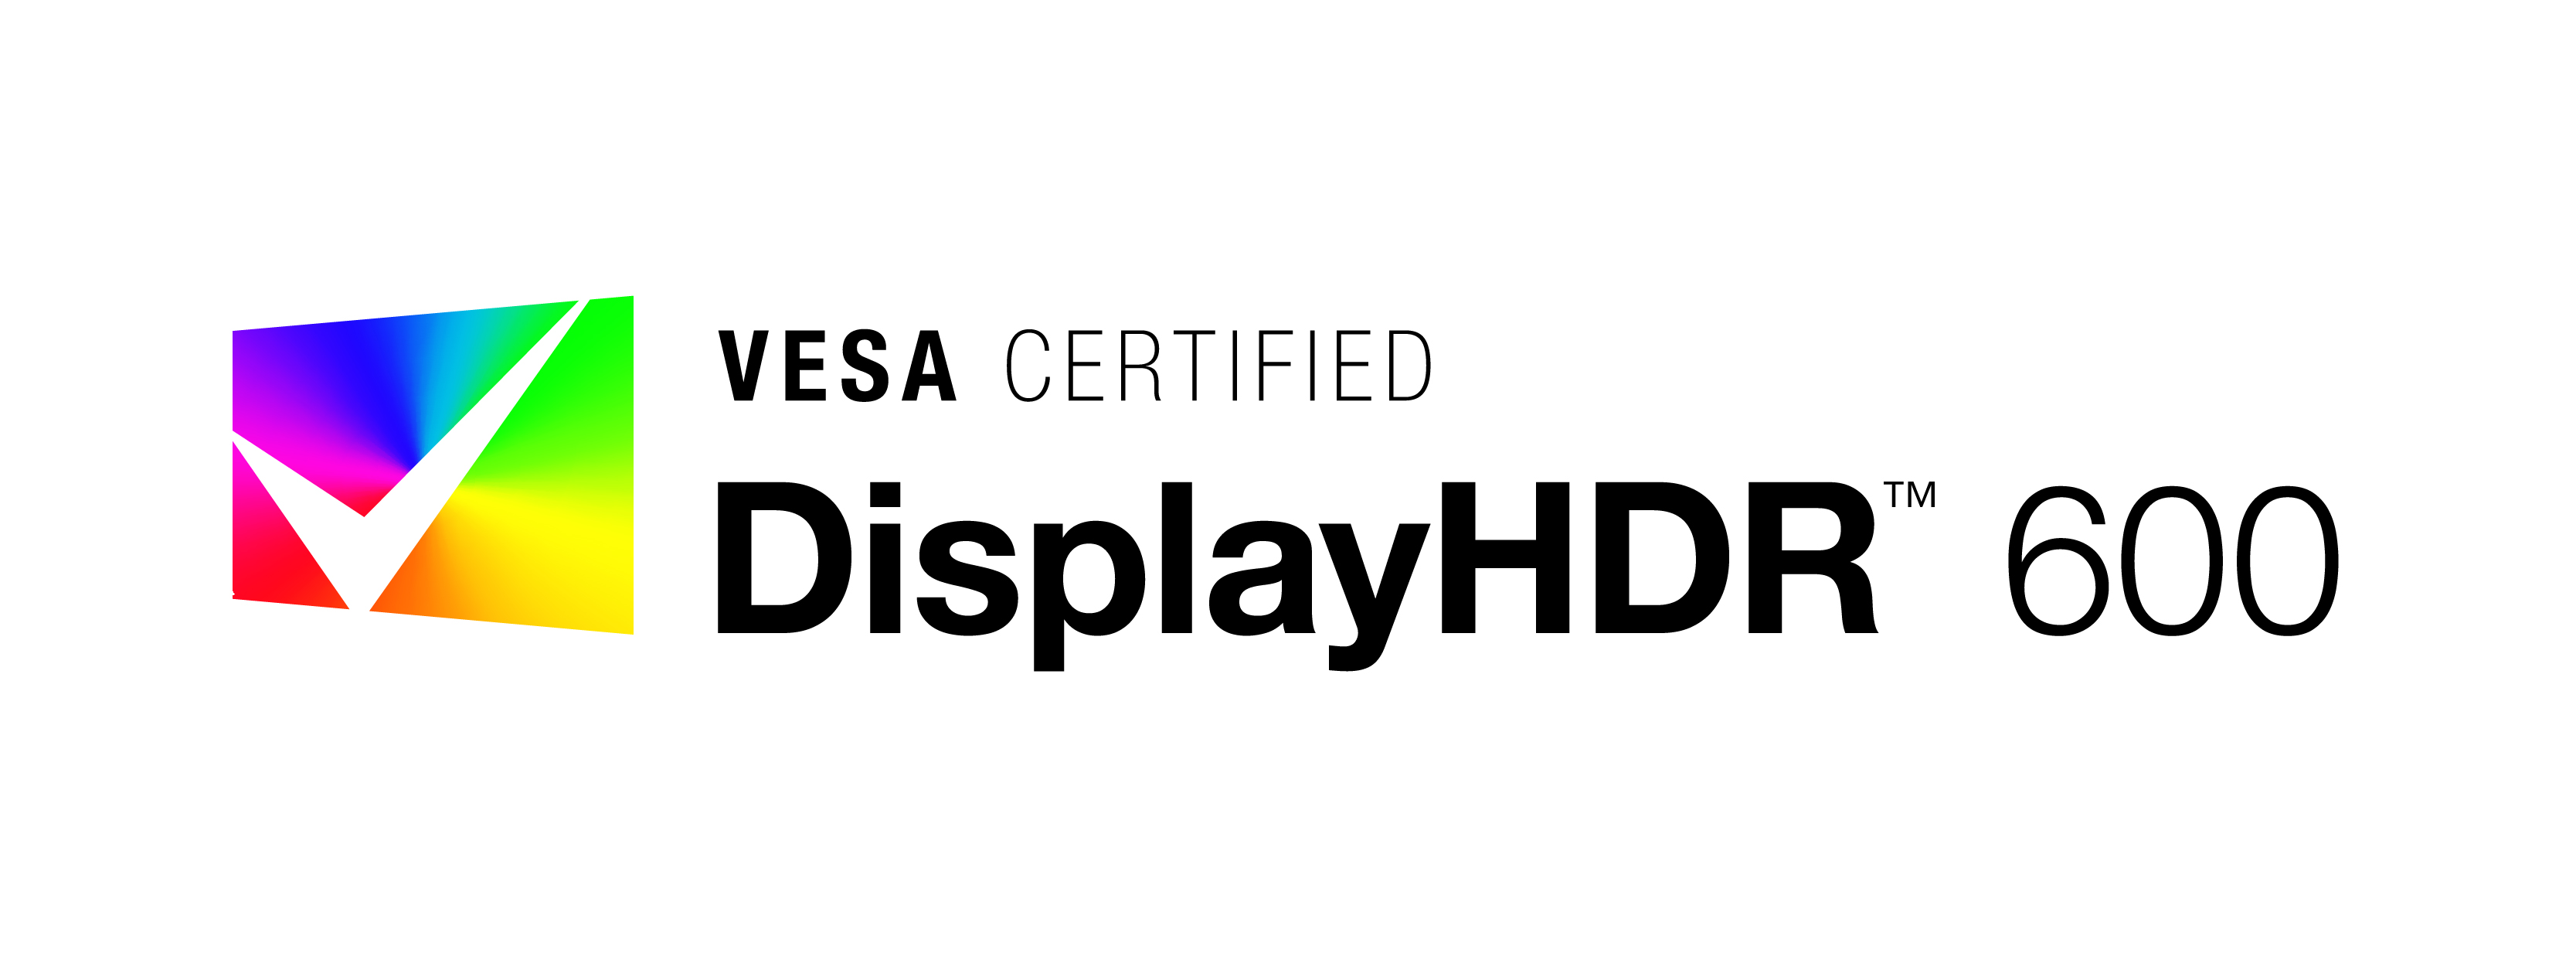 VESA Certified DisplayHDR 600